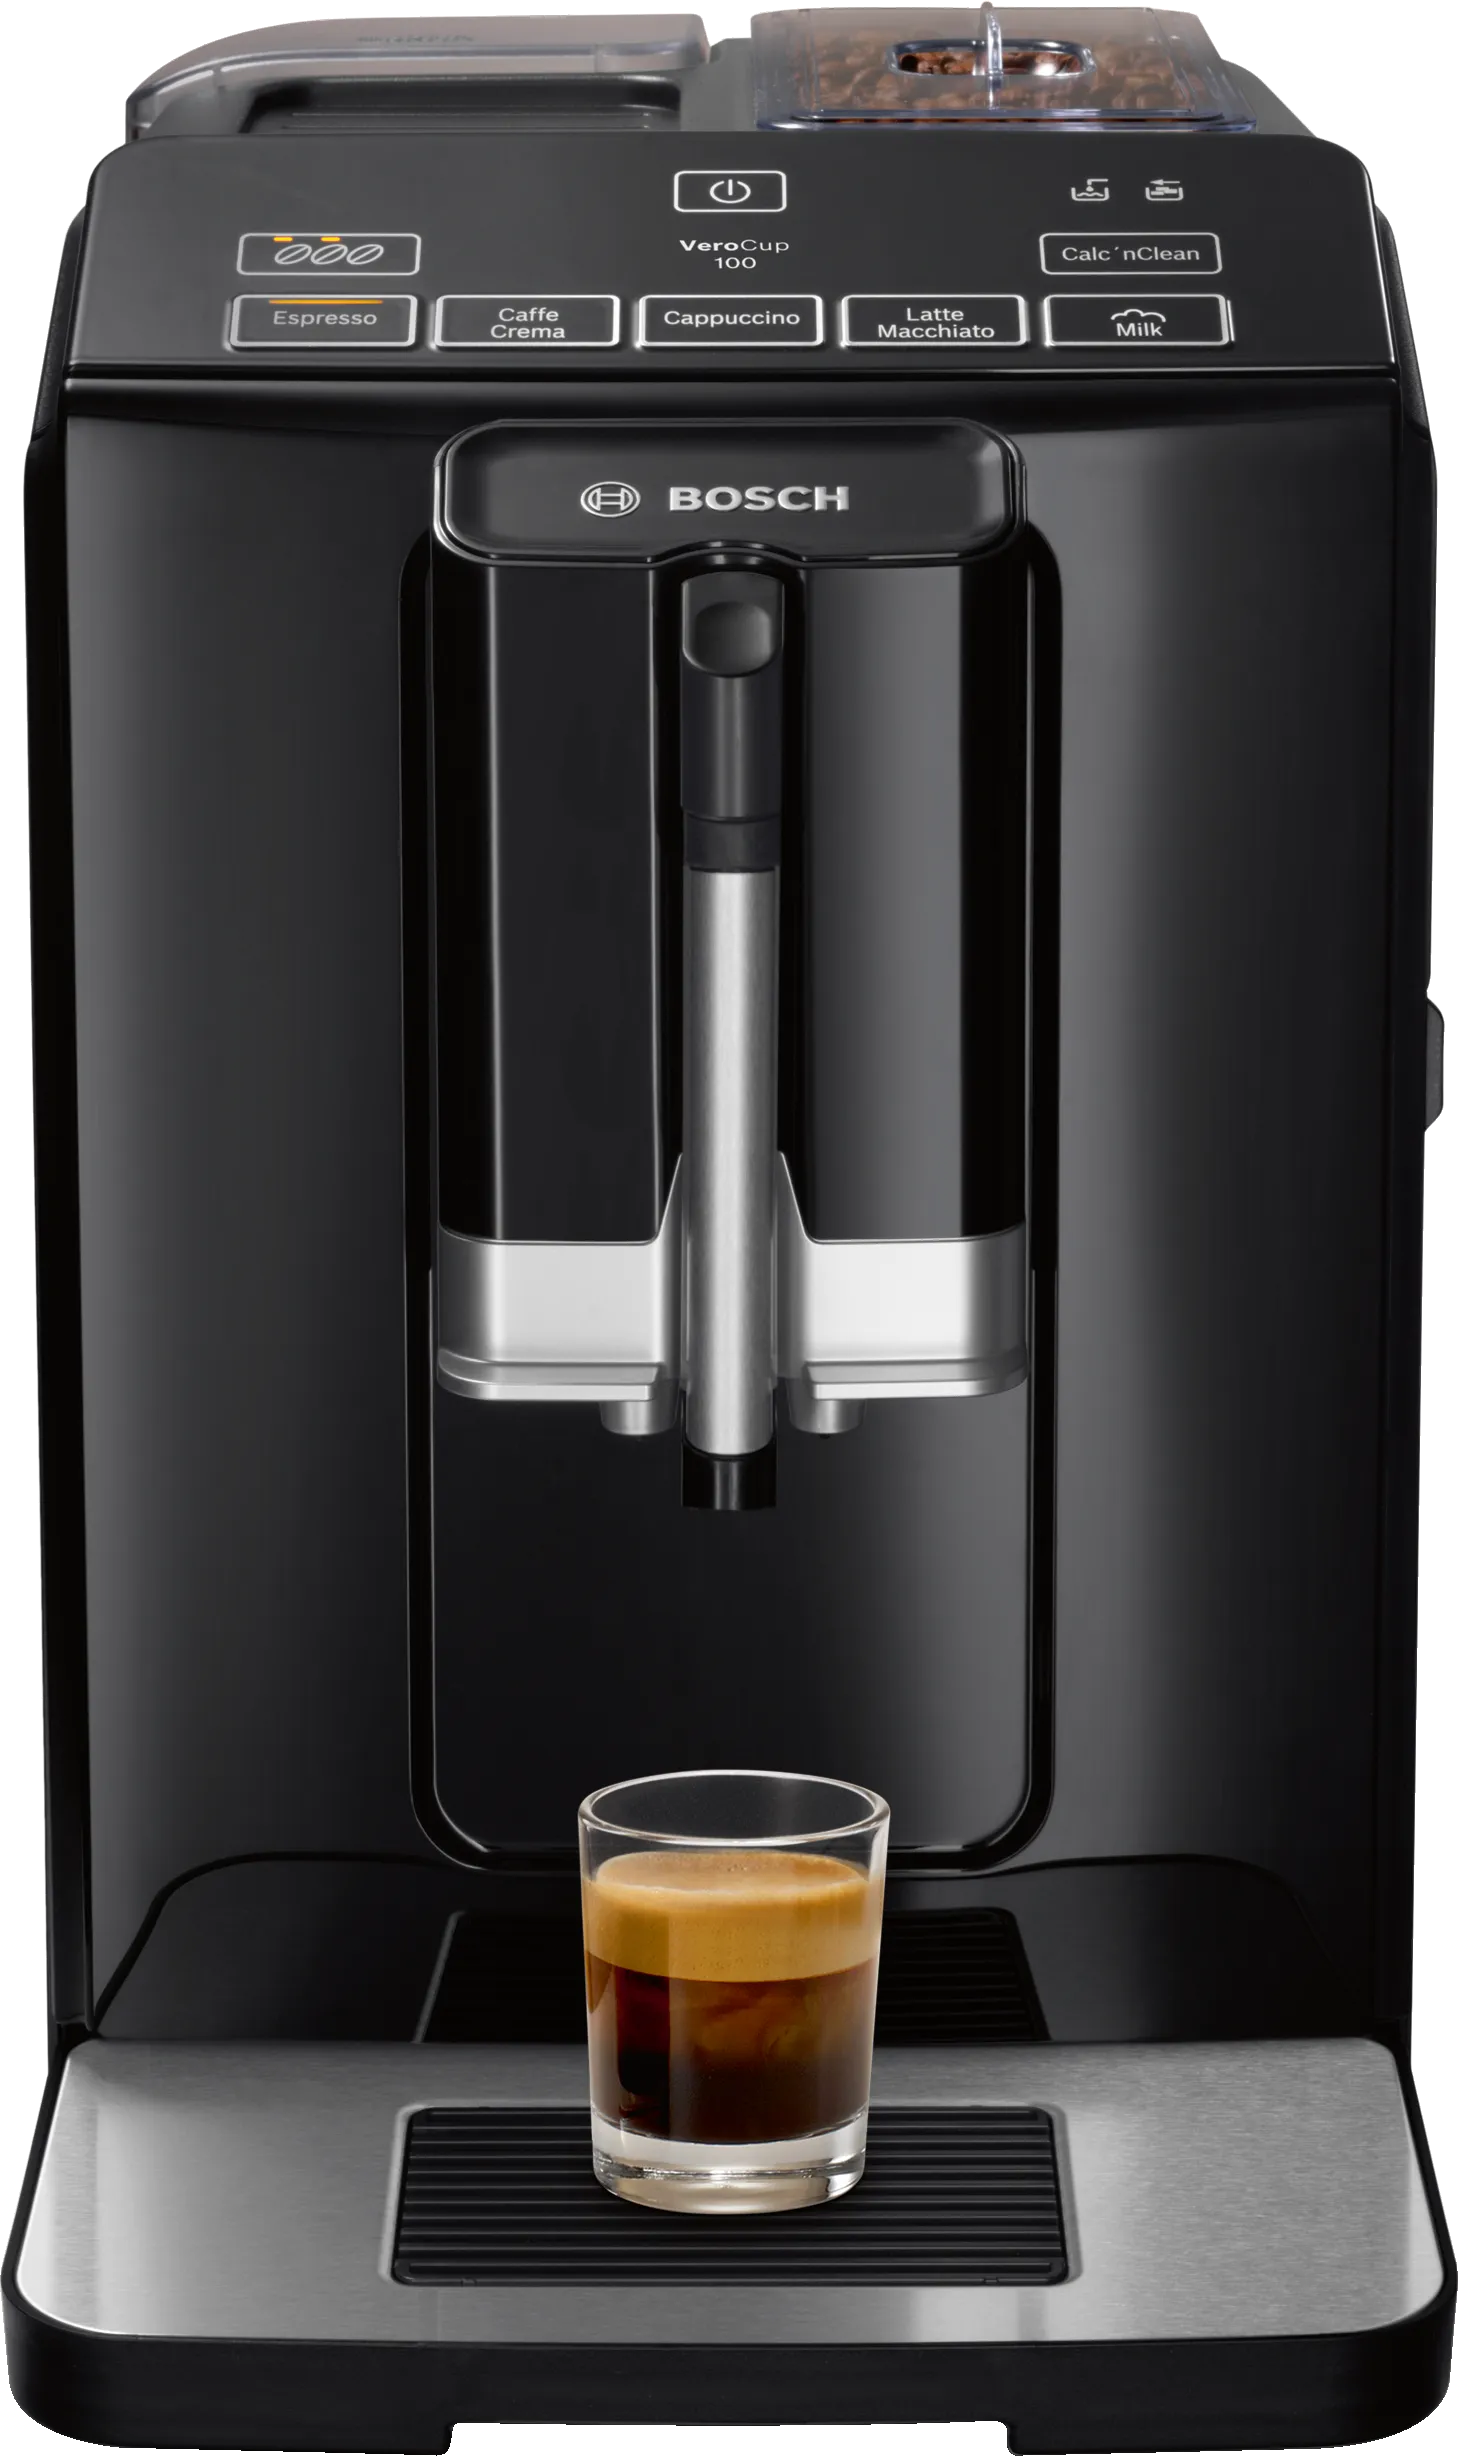 Fully automatic coffee machine VeroCup 100 Black 